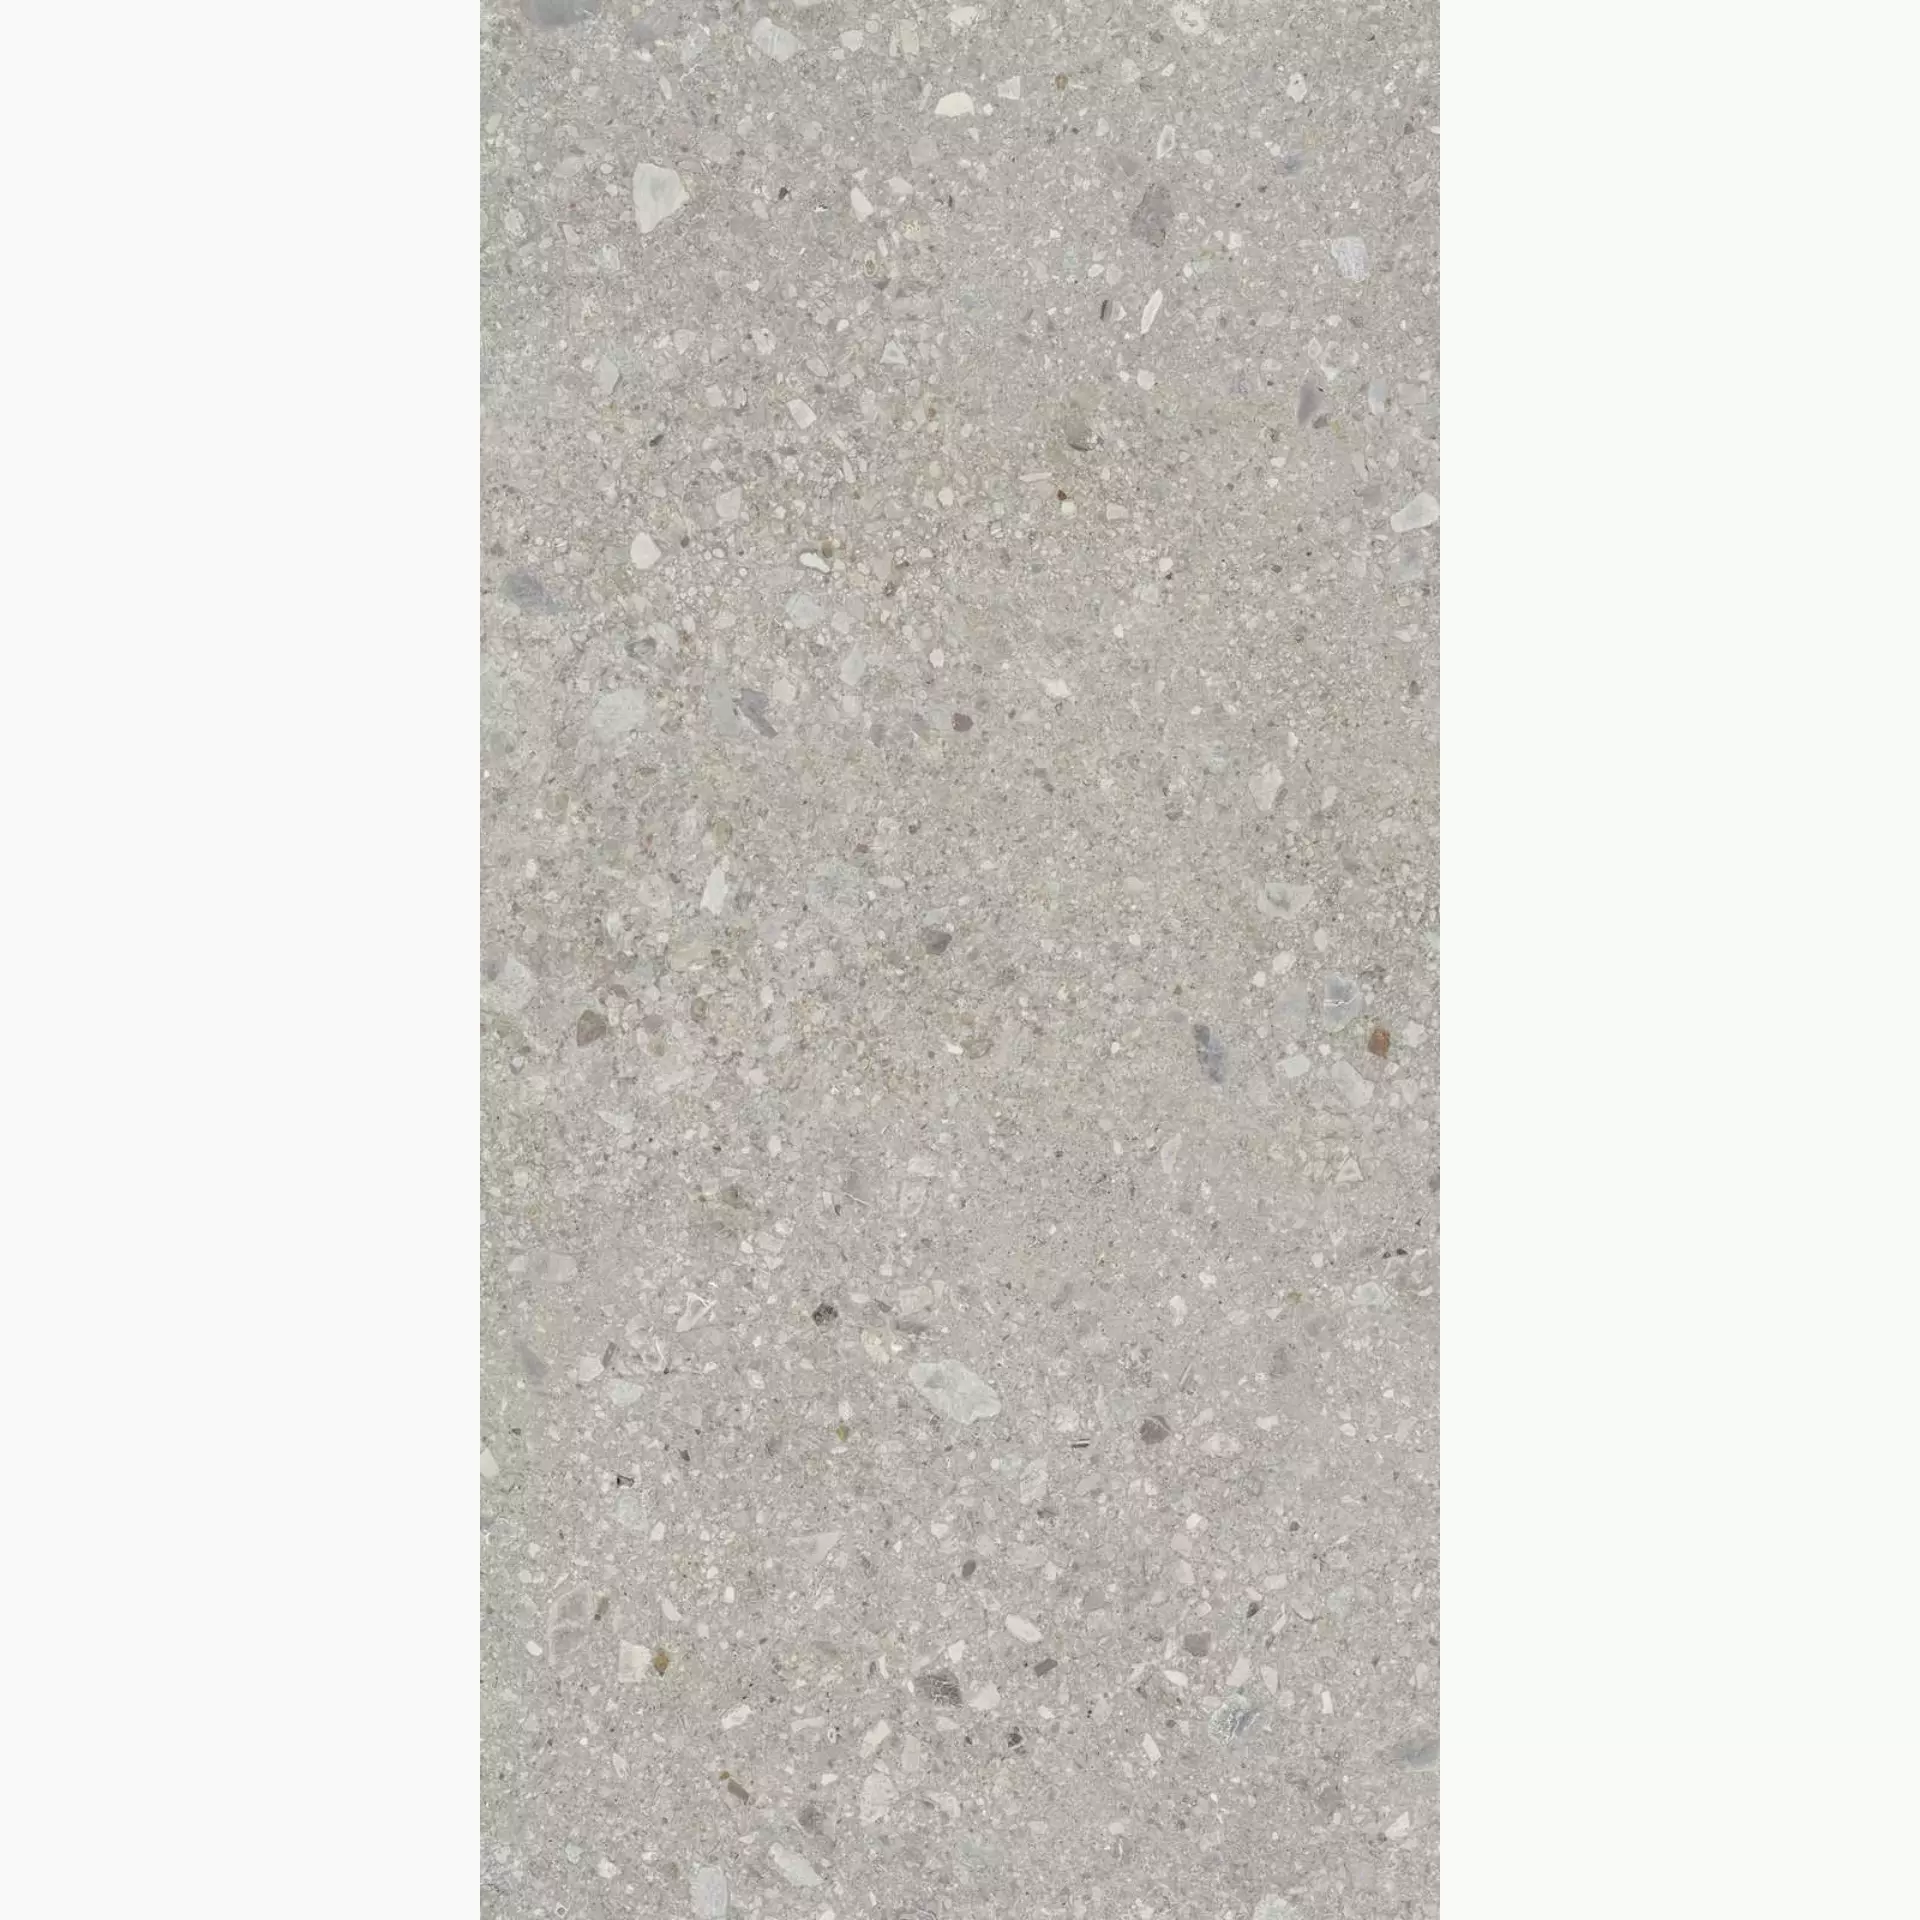 Marazzi Grande Stone Look Ceppo Di Gré Grey Naturale – Matt M10W 120x240cm rectified 6mm